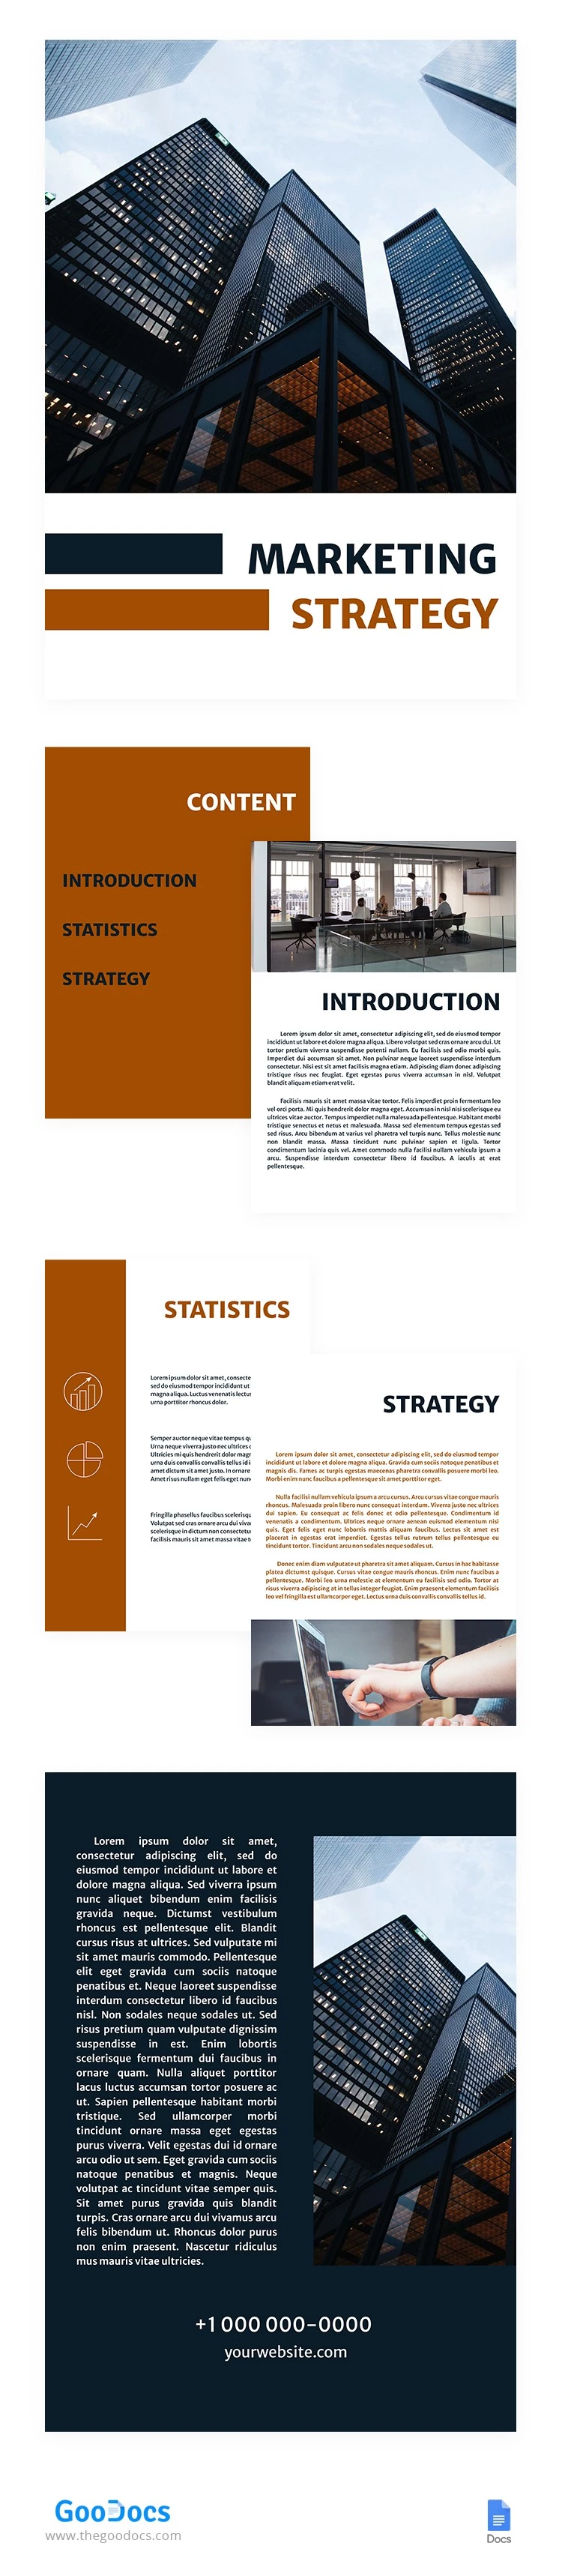 Nuevo libro de estrategia de marketing - free Google Docs Template - 10062690